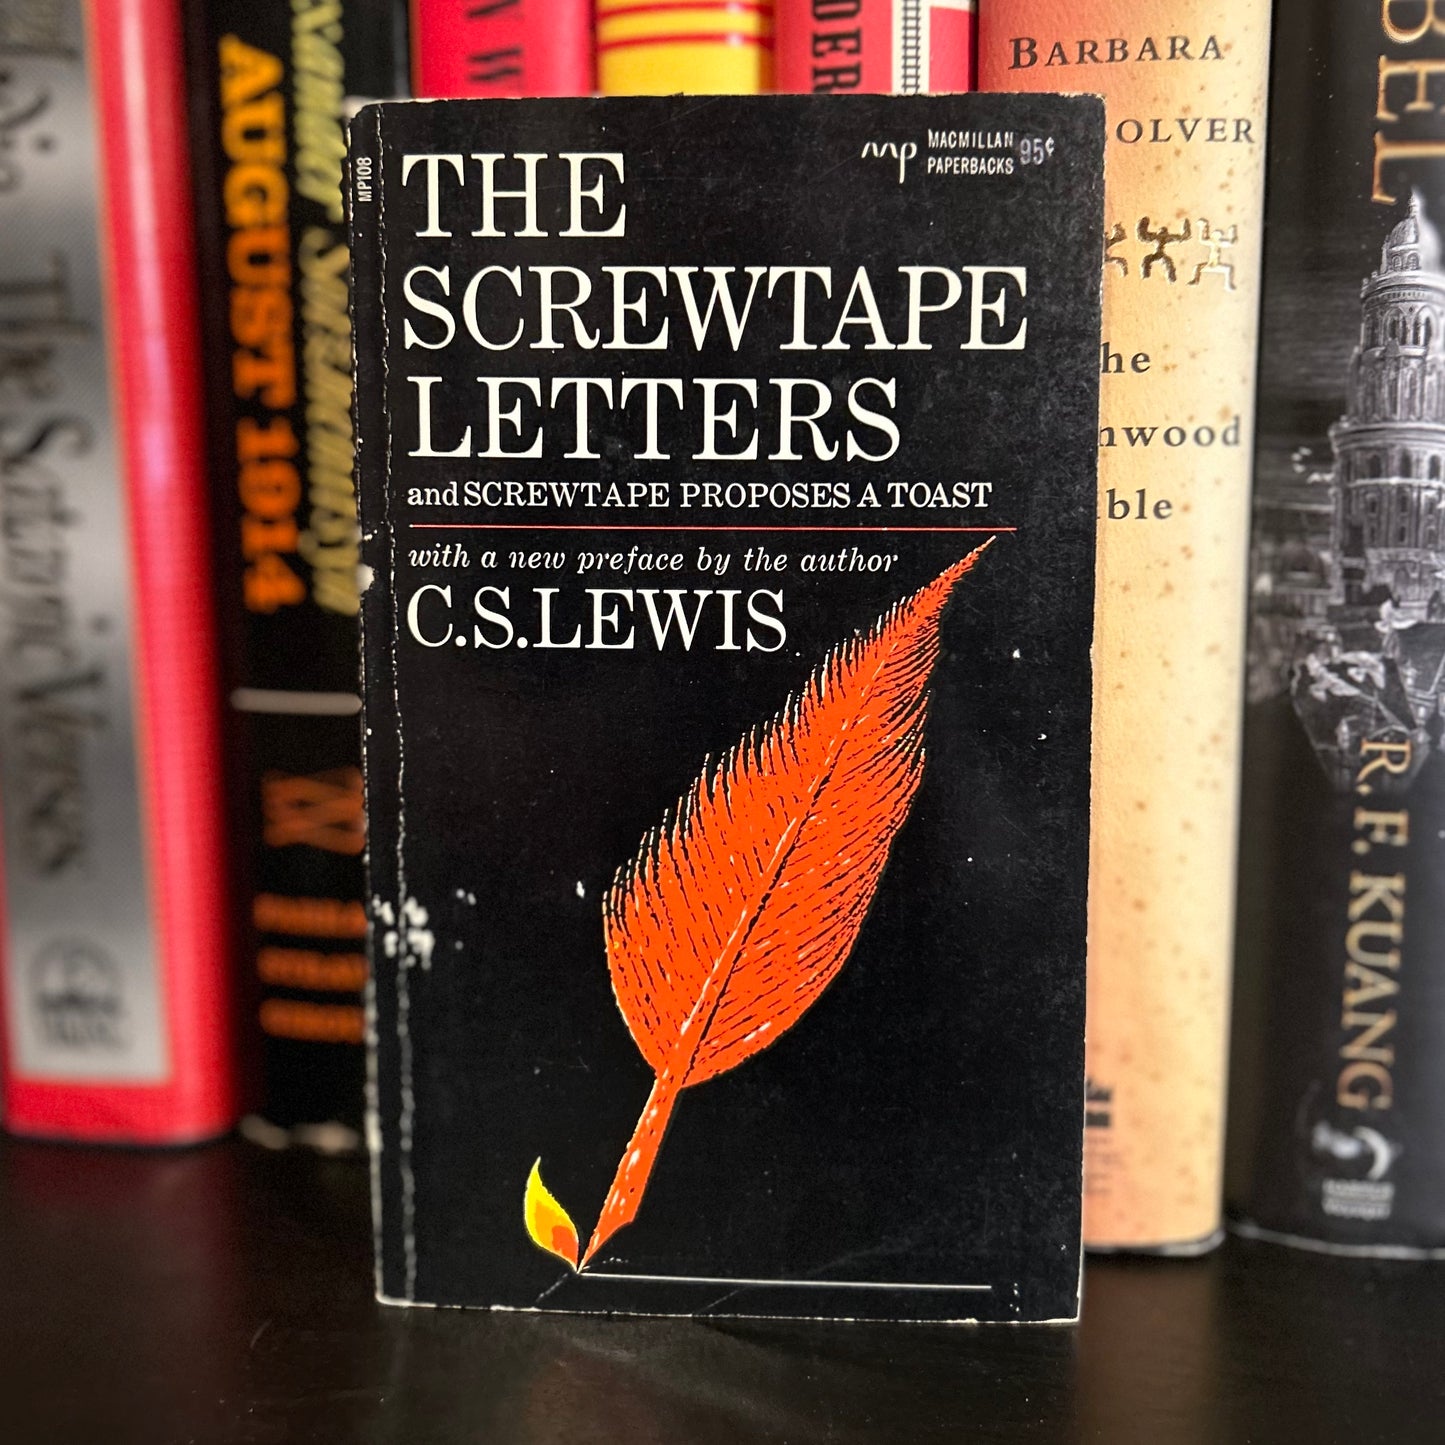 The Screwtape Letters - C.S. Lewis - mm